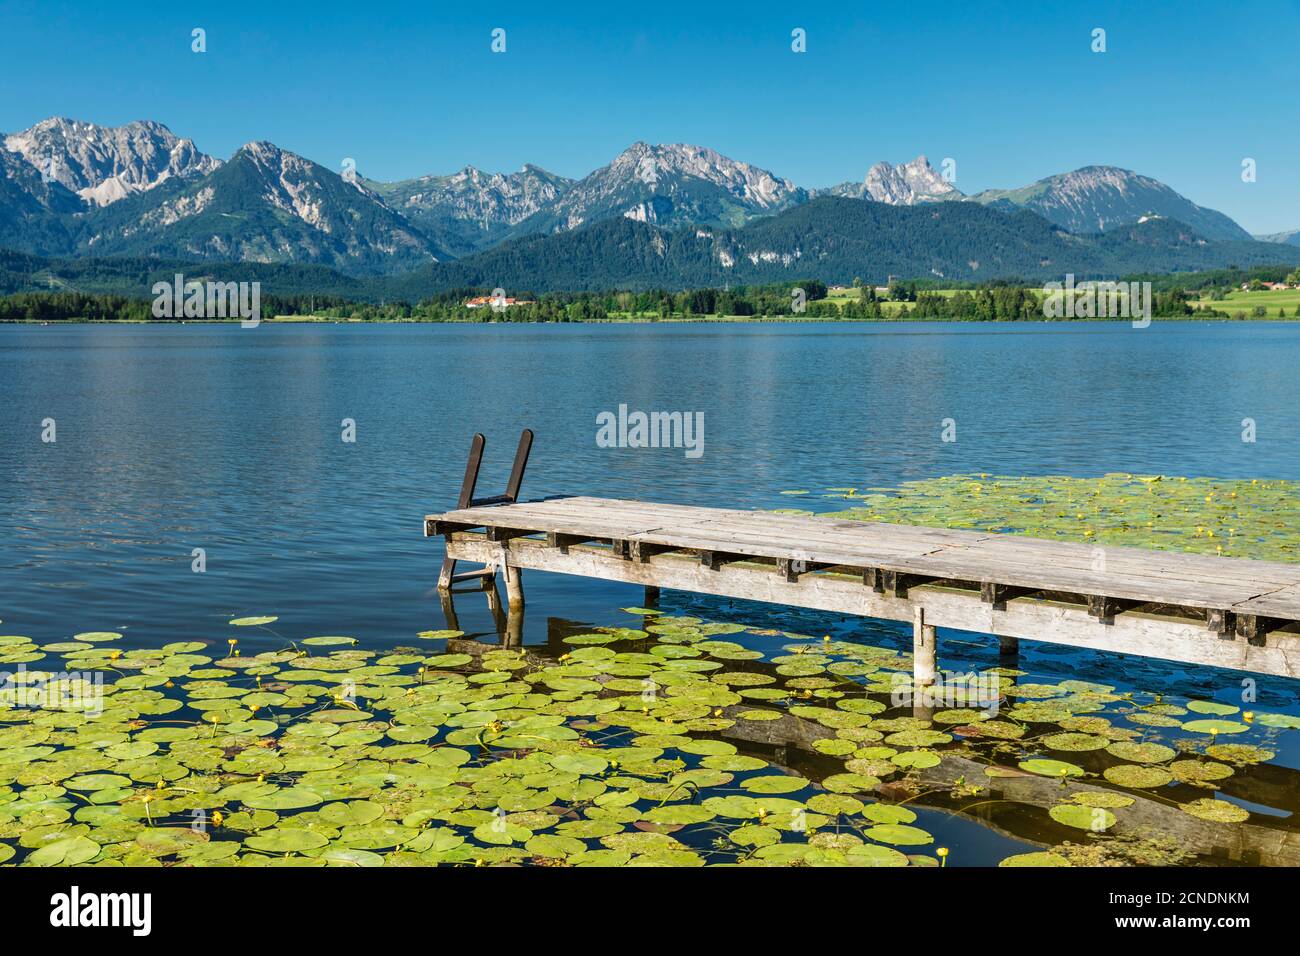 Molo sul lago Hopfensee, Hopfen am See, Alpi Allgau, Allgau, Schwaben, Baviera, Germania, Europa Foto Stock